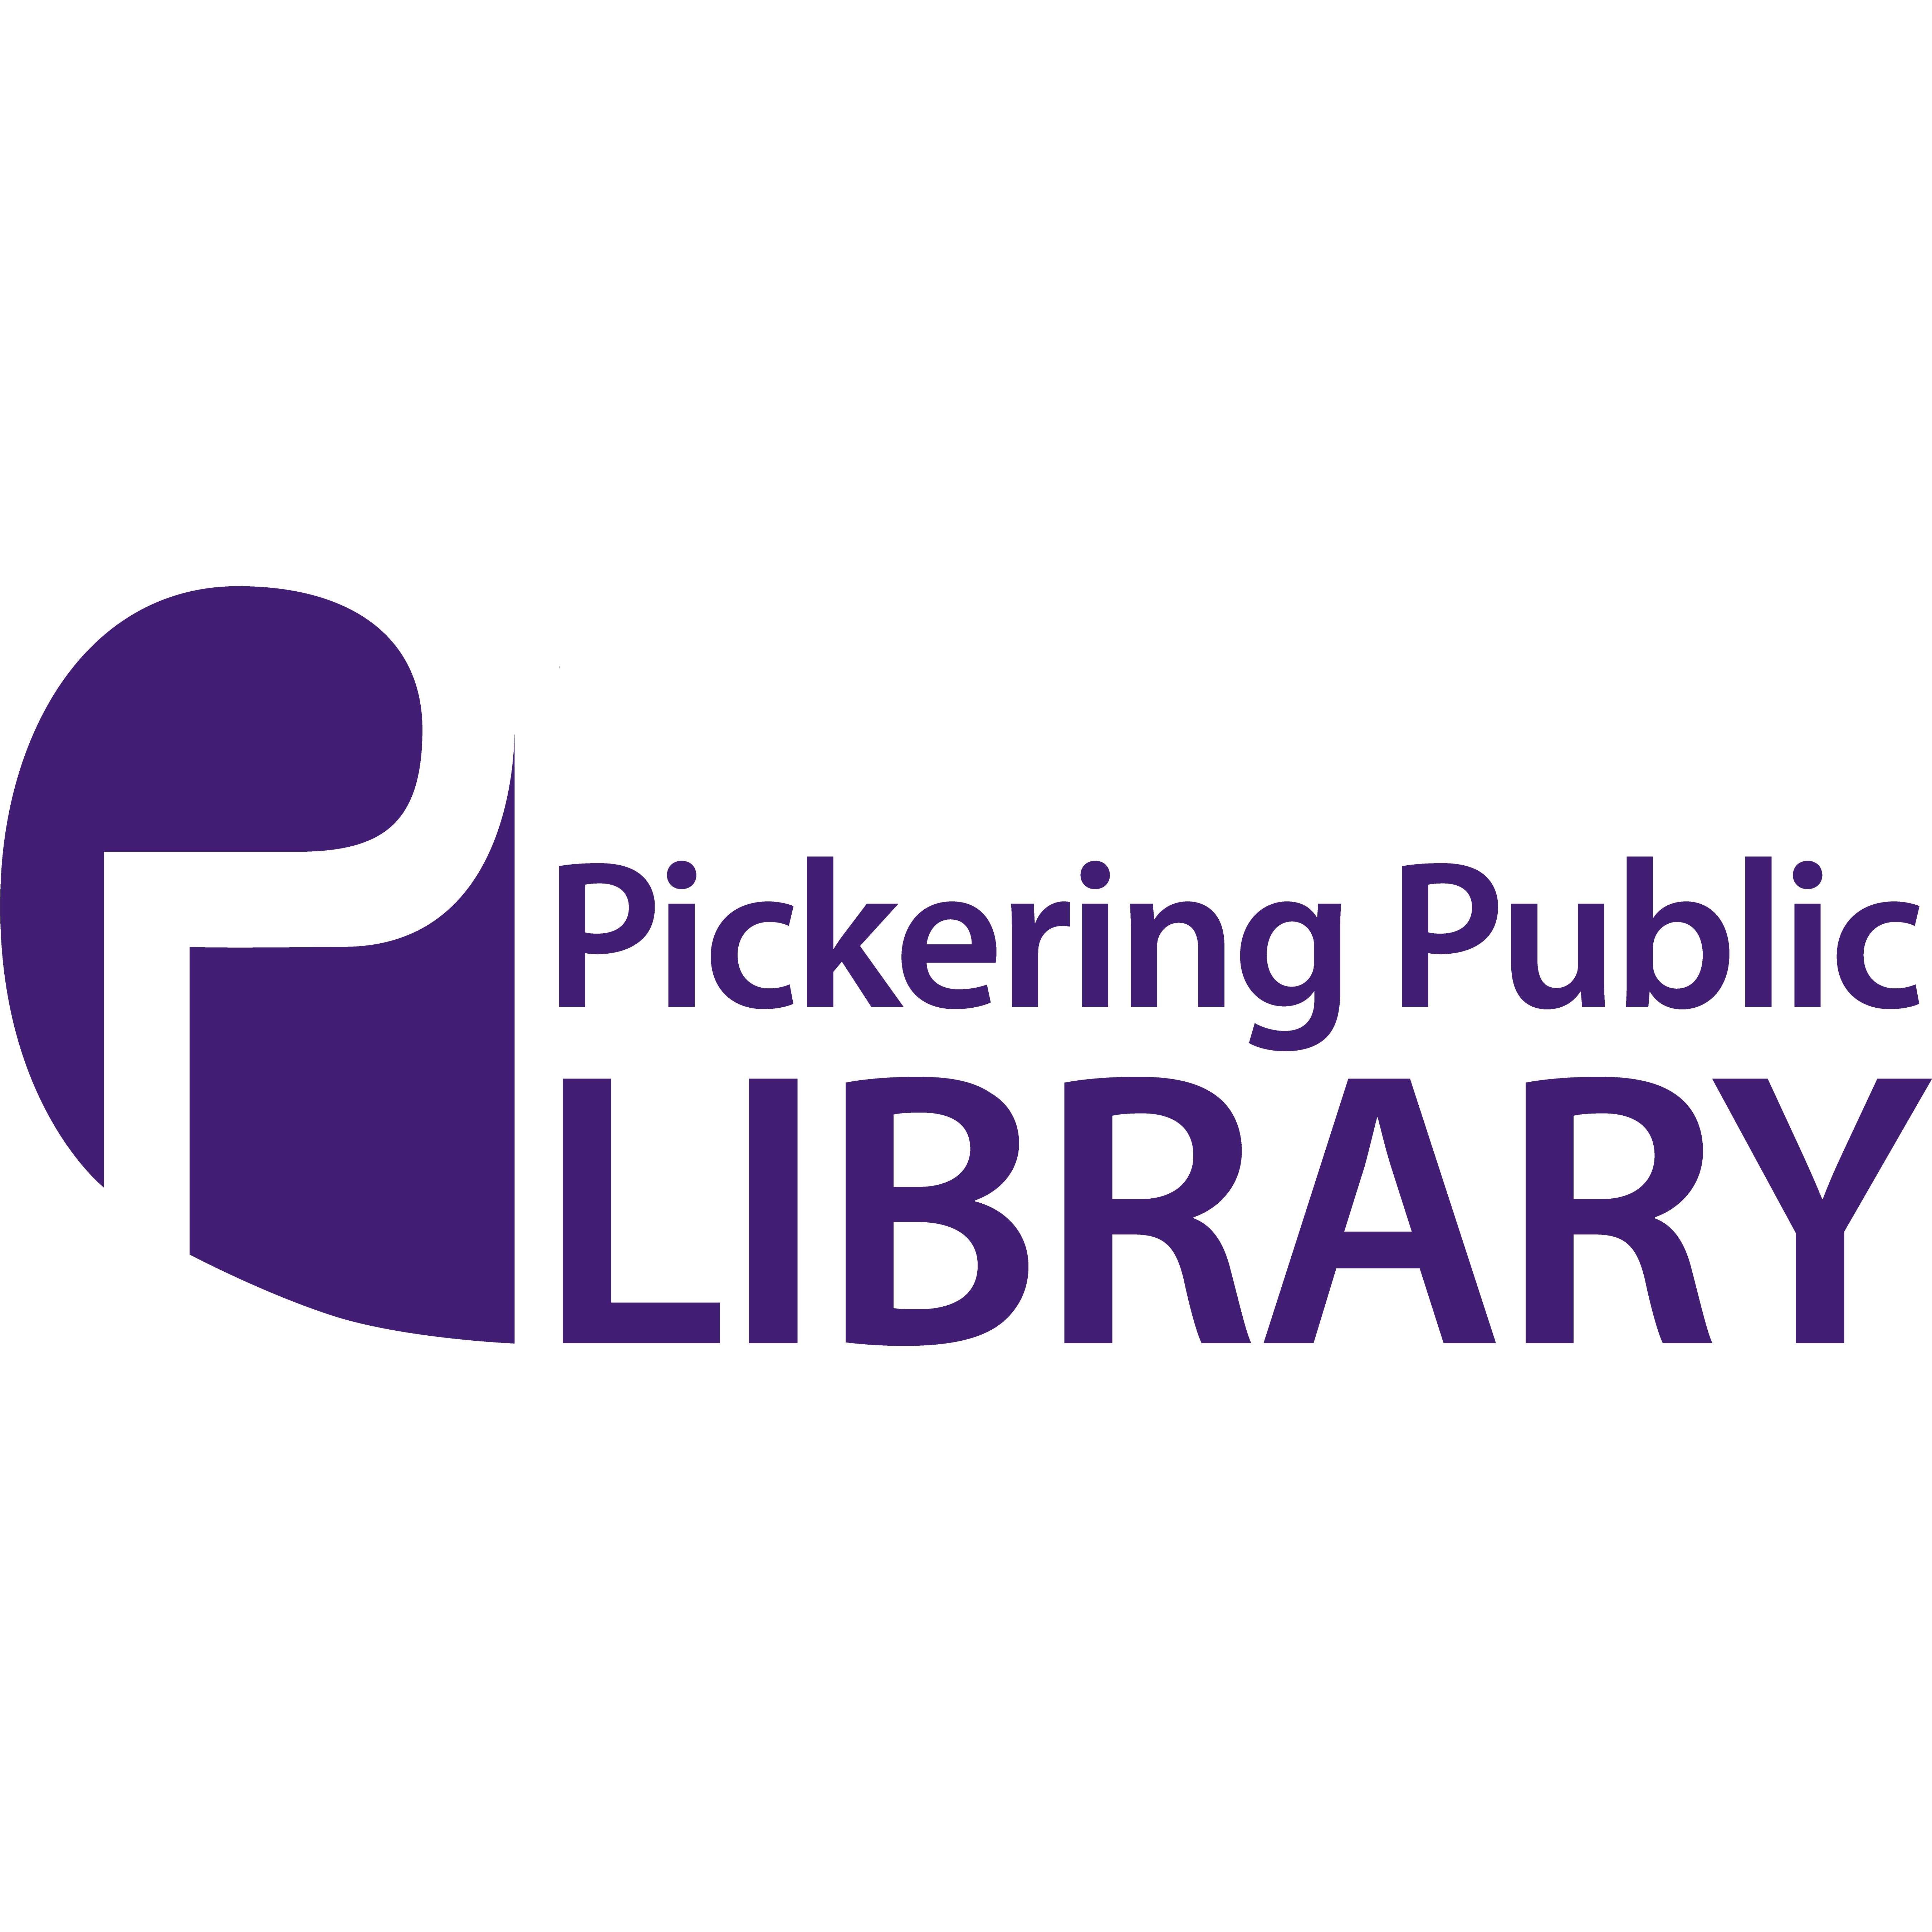 Pickering Public Library logo